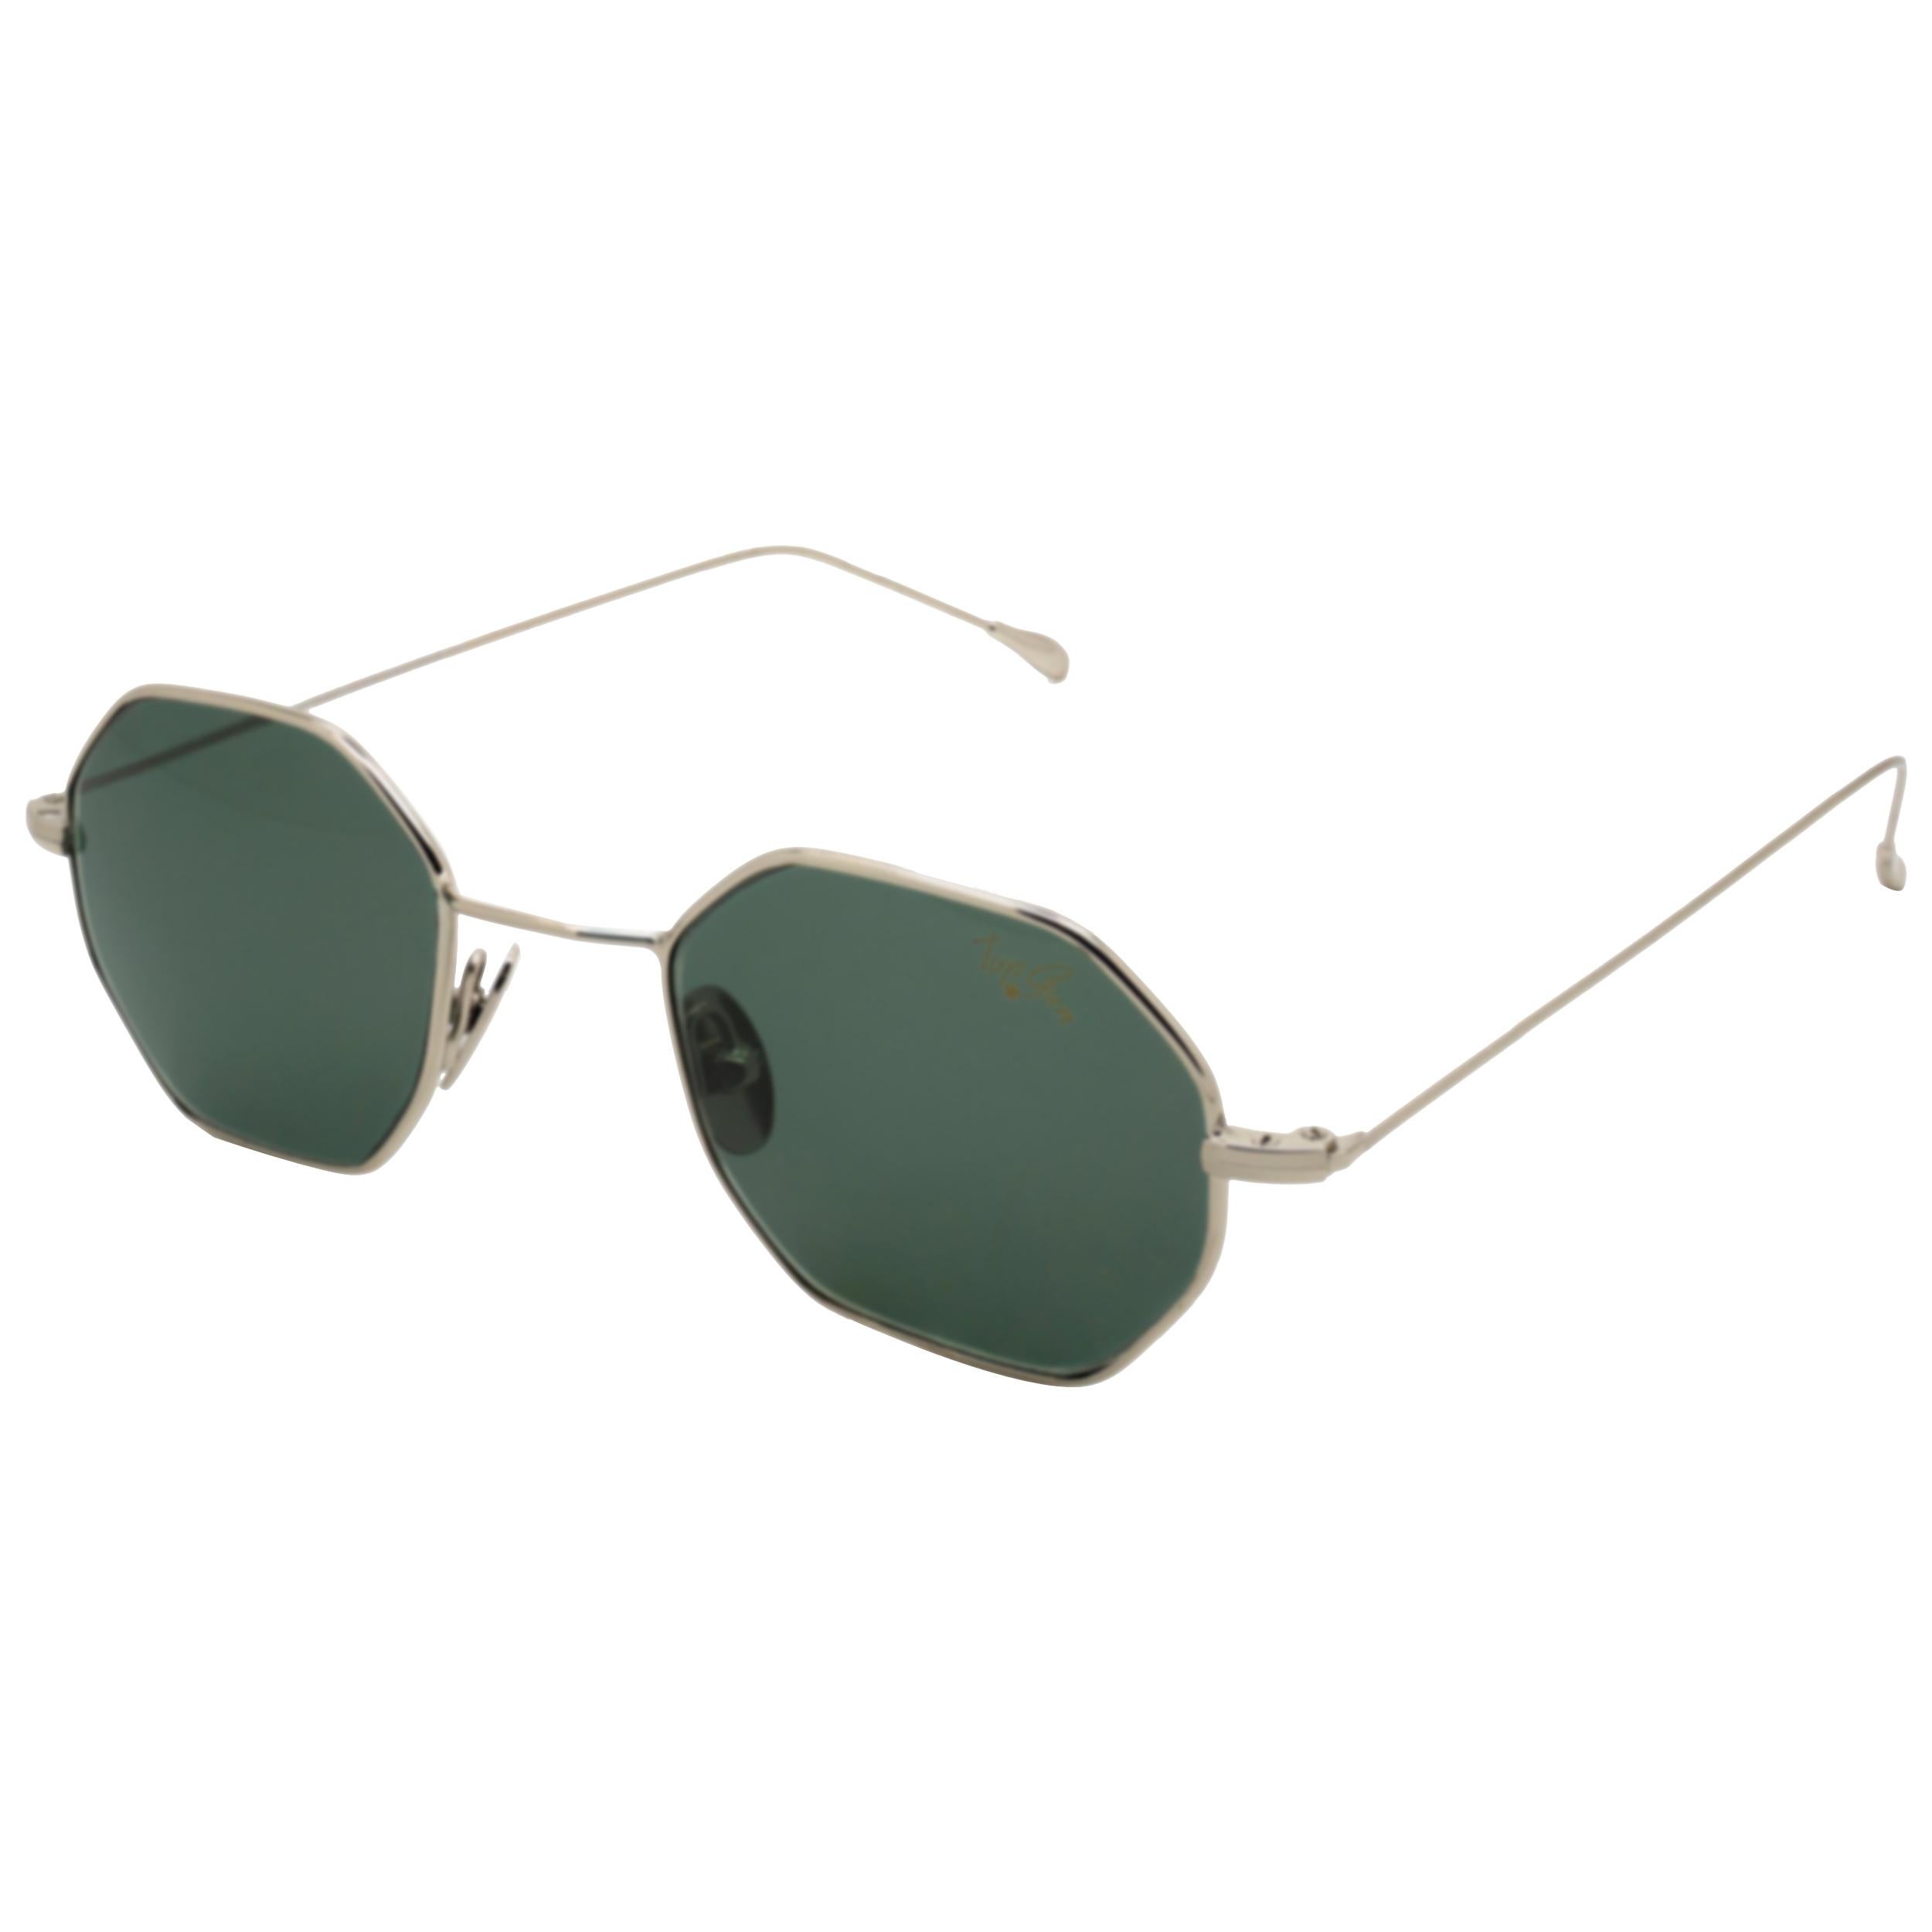 Top Gun hexagonal vintage sunglasses, ITALY 90s For Sale